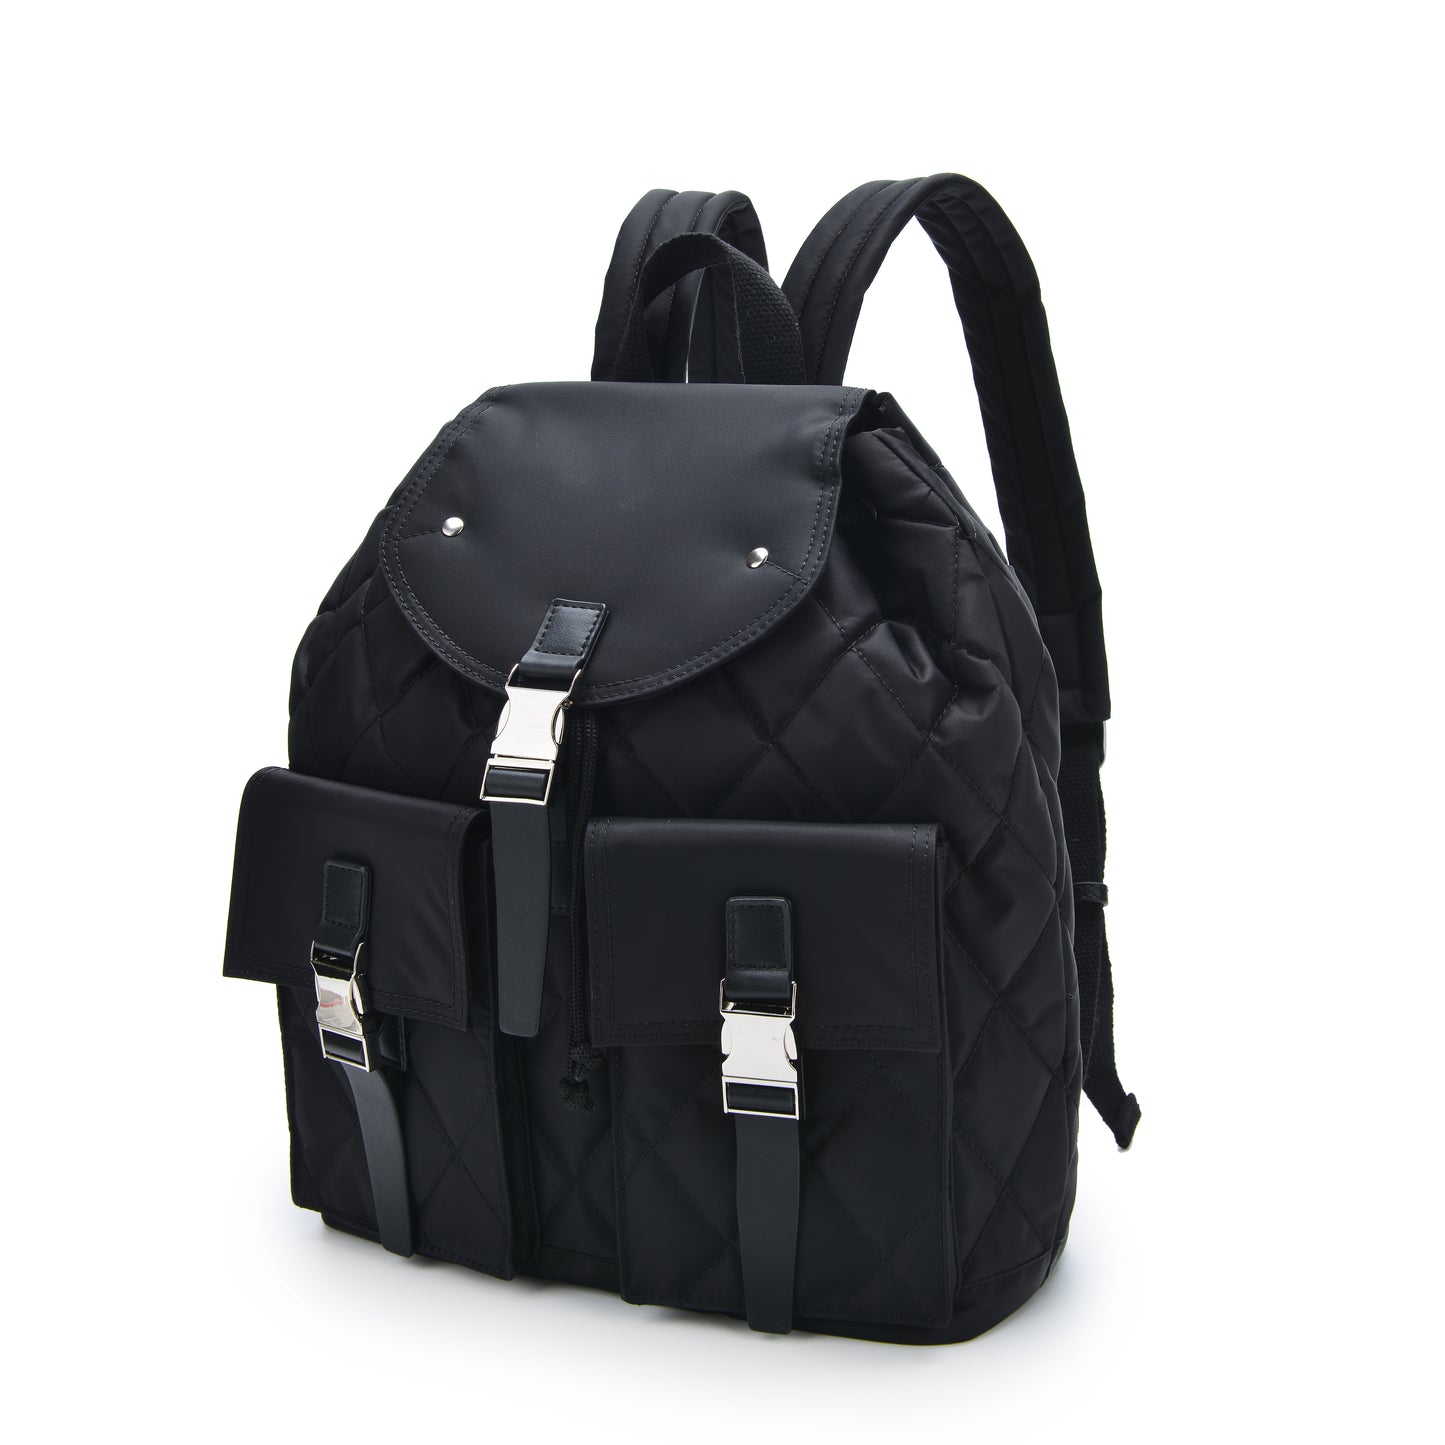 Núnoo Backpack quilt Recycled nylon Black Back pack Black